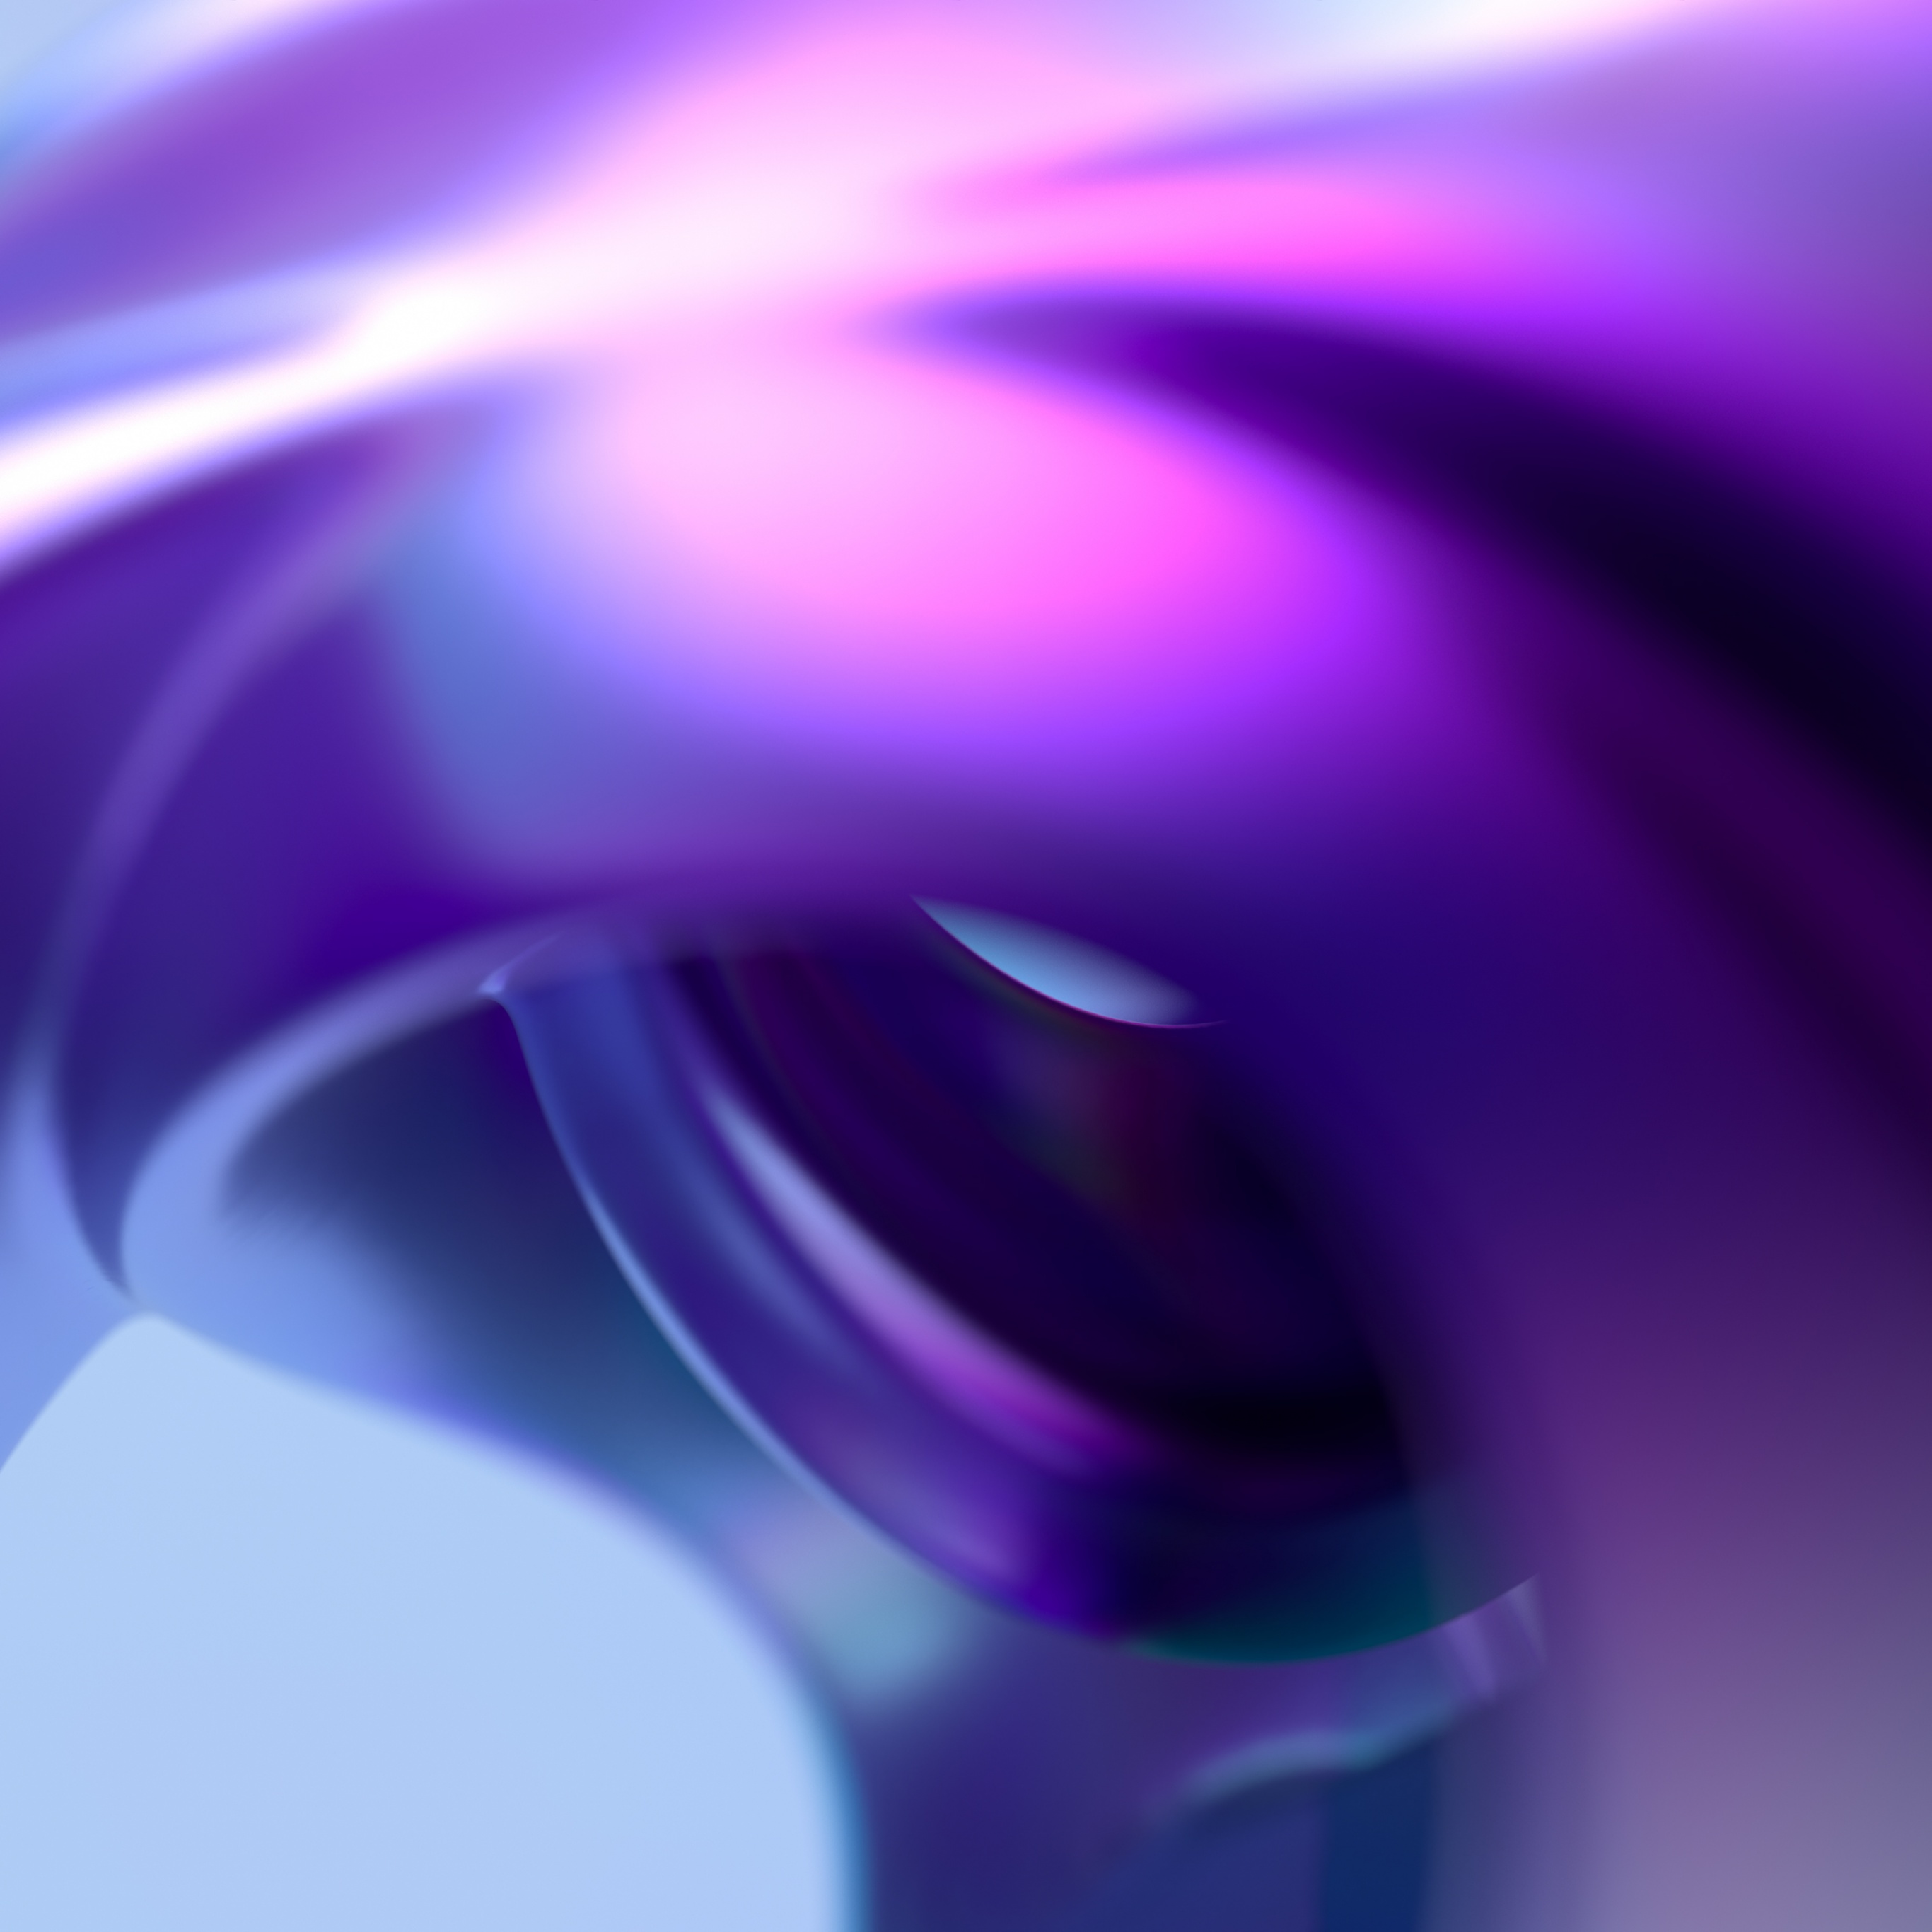 3d purple abstract wallpaper